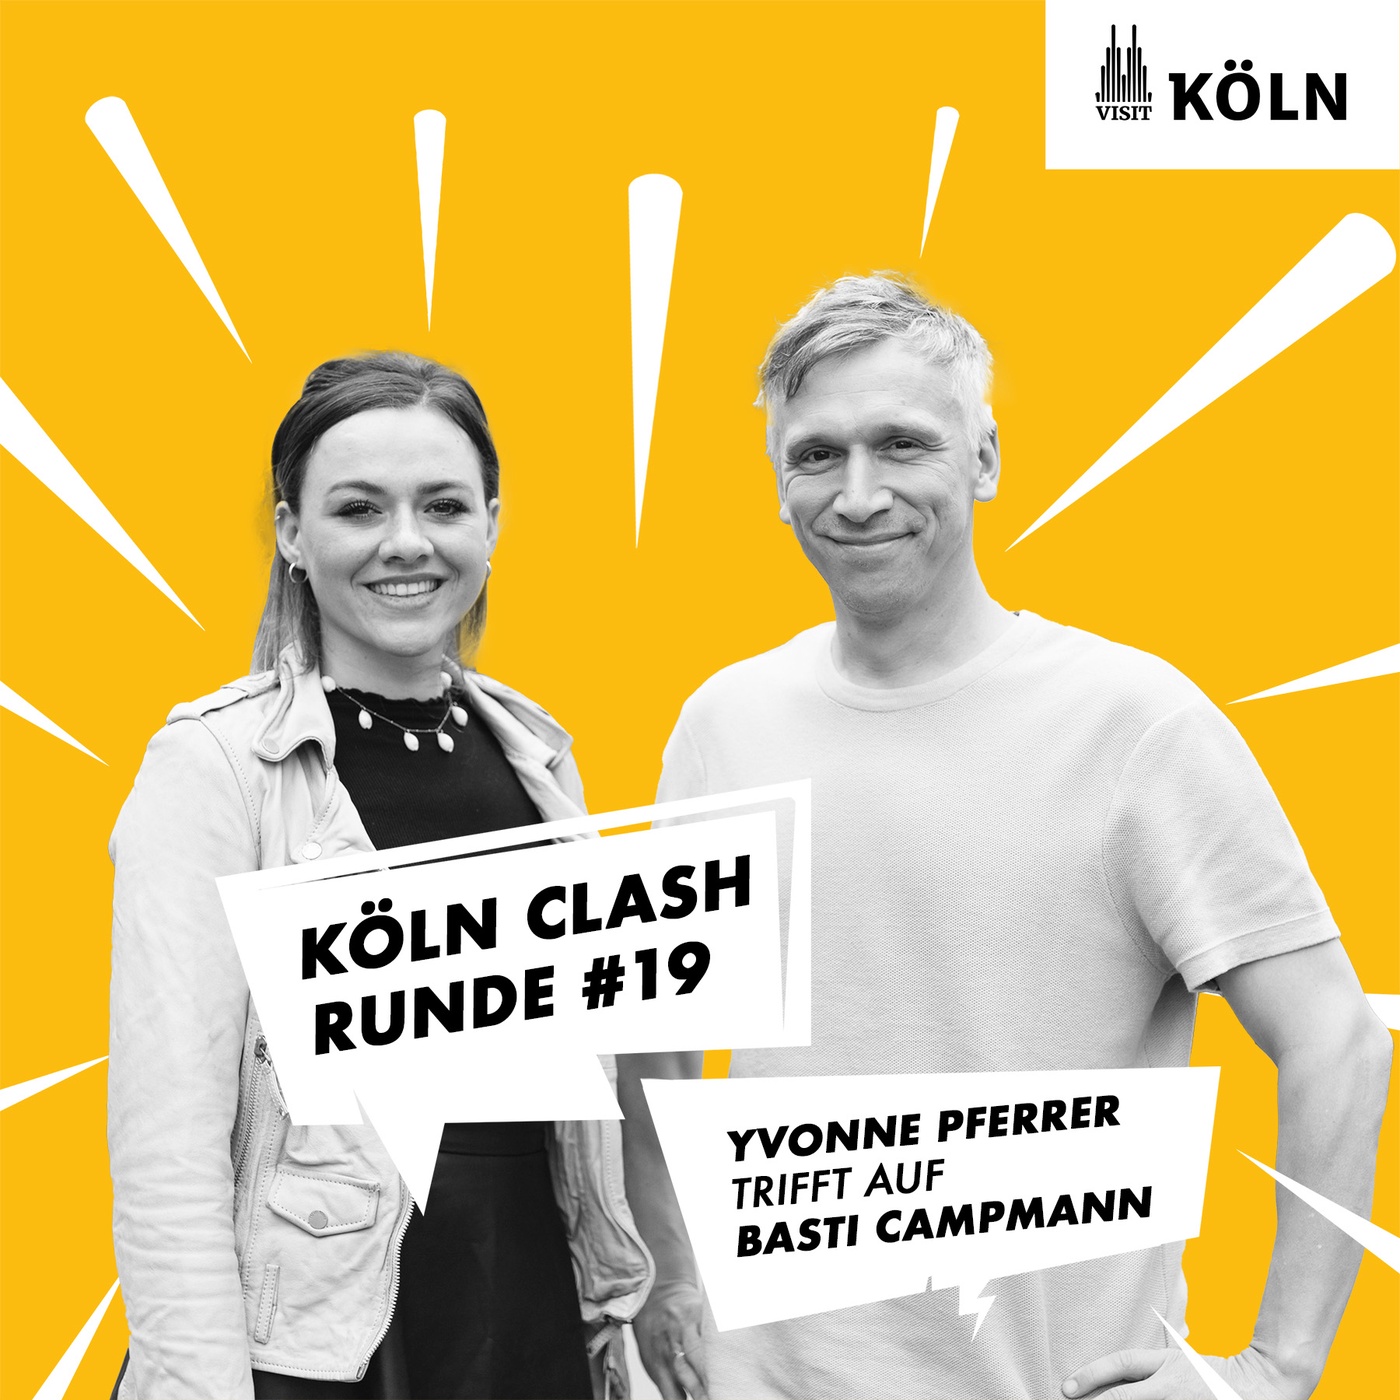 Köln Clash, Runde #19 - Yvonne Pferrer trifft auf Basti Campmann